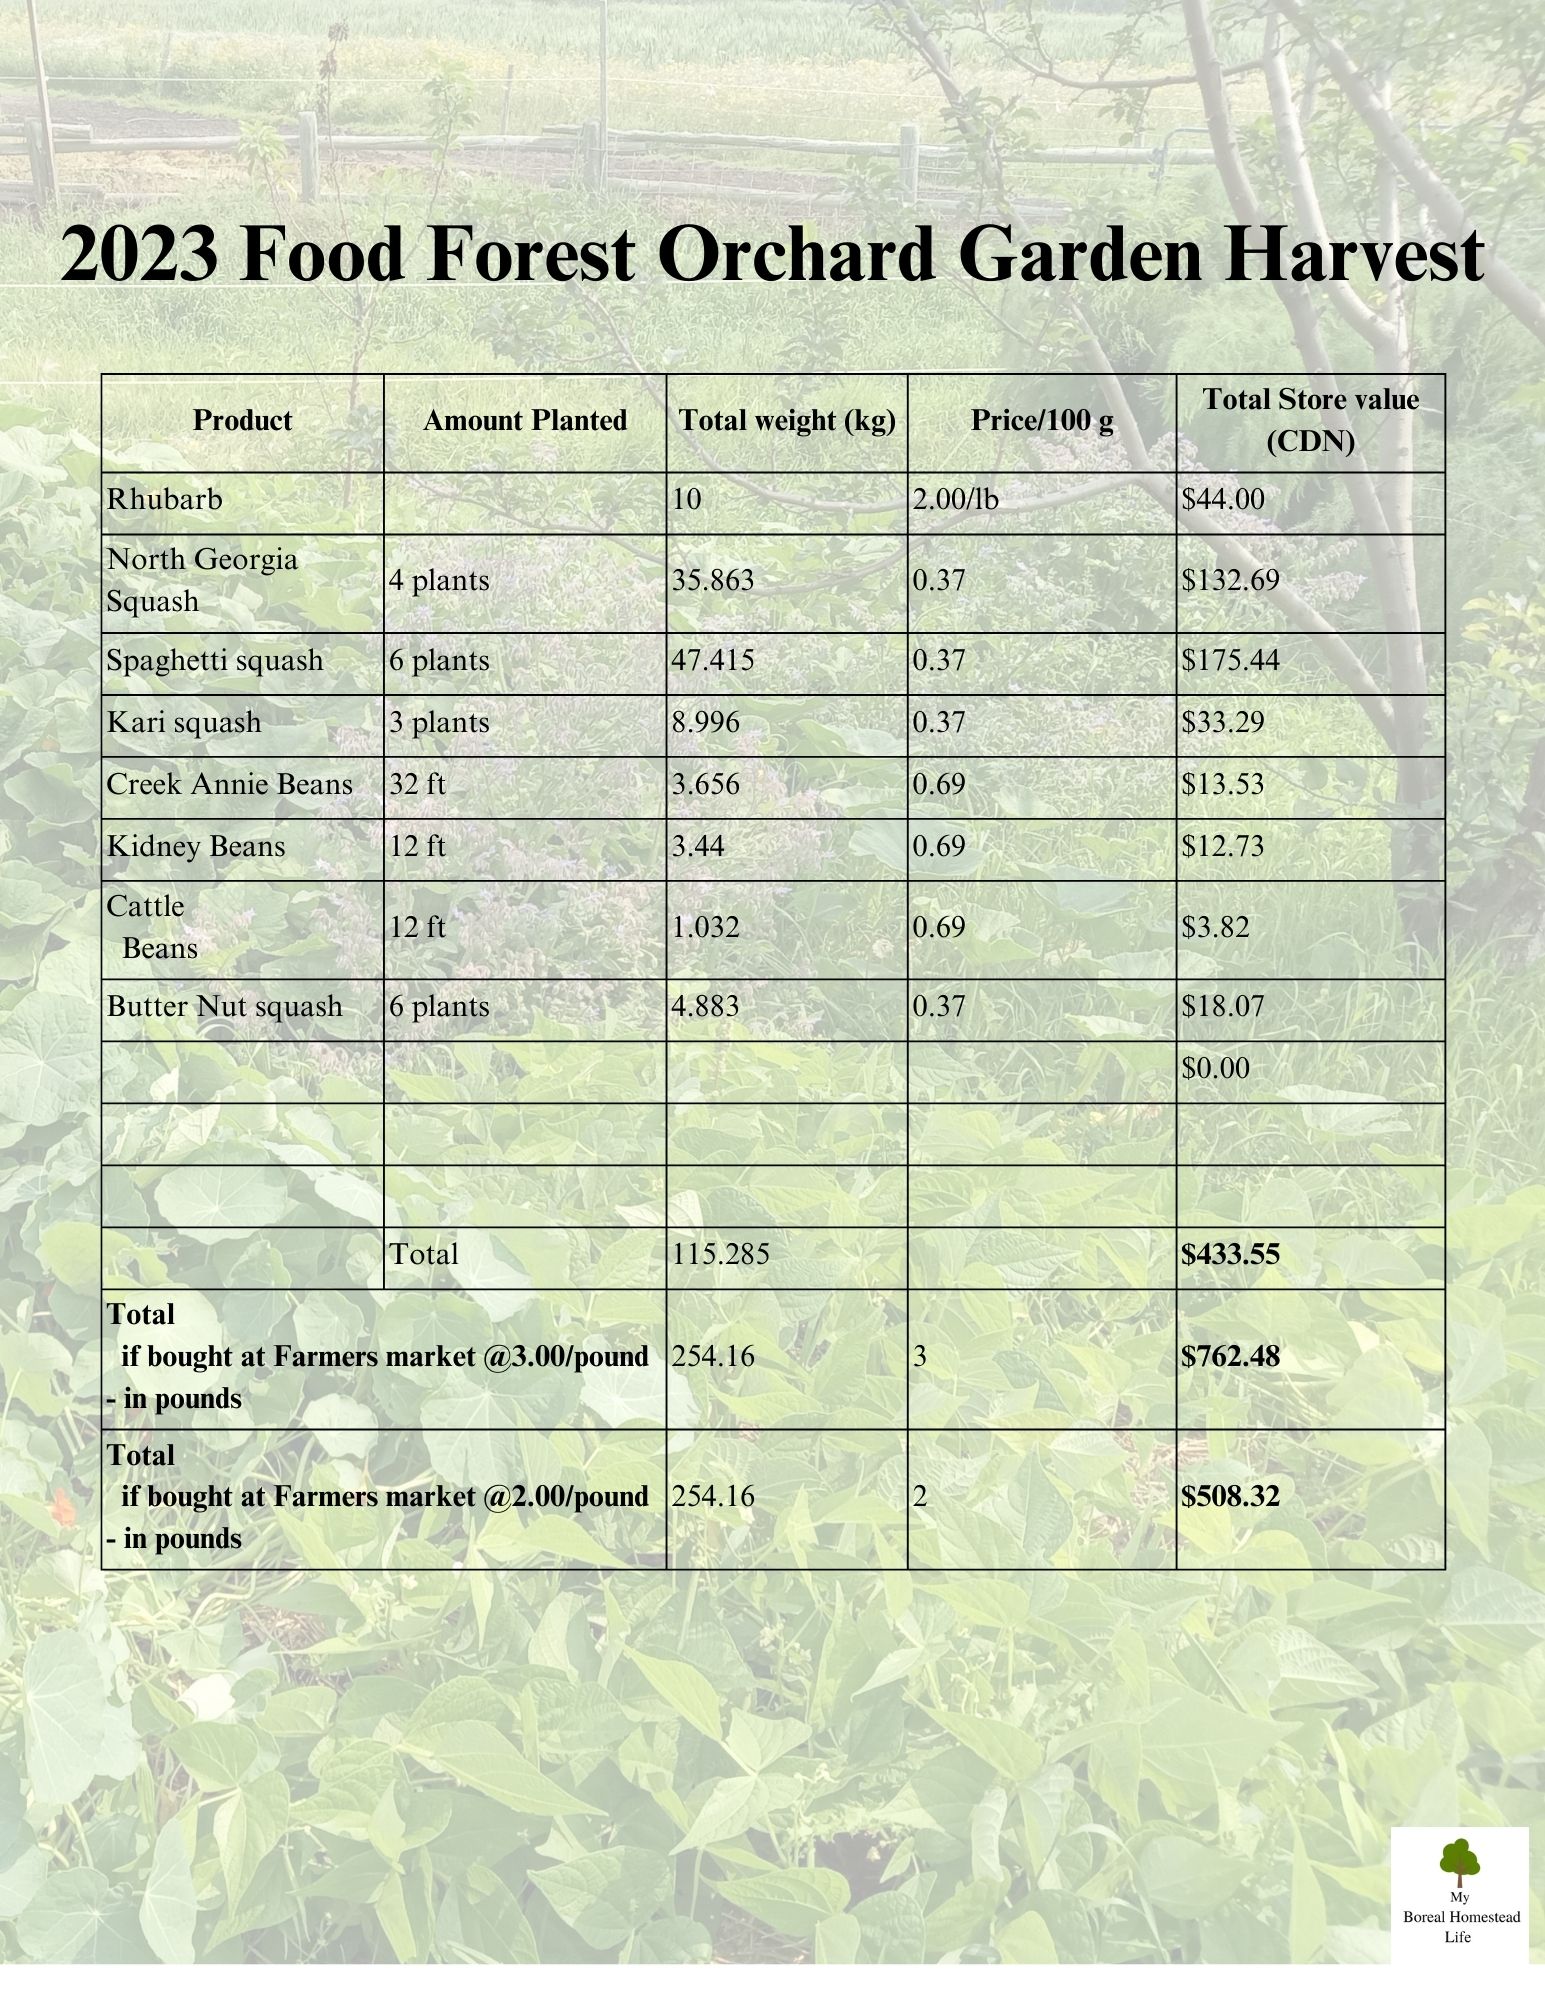 Food forest orchard garden -harvest analysis